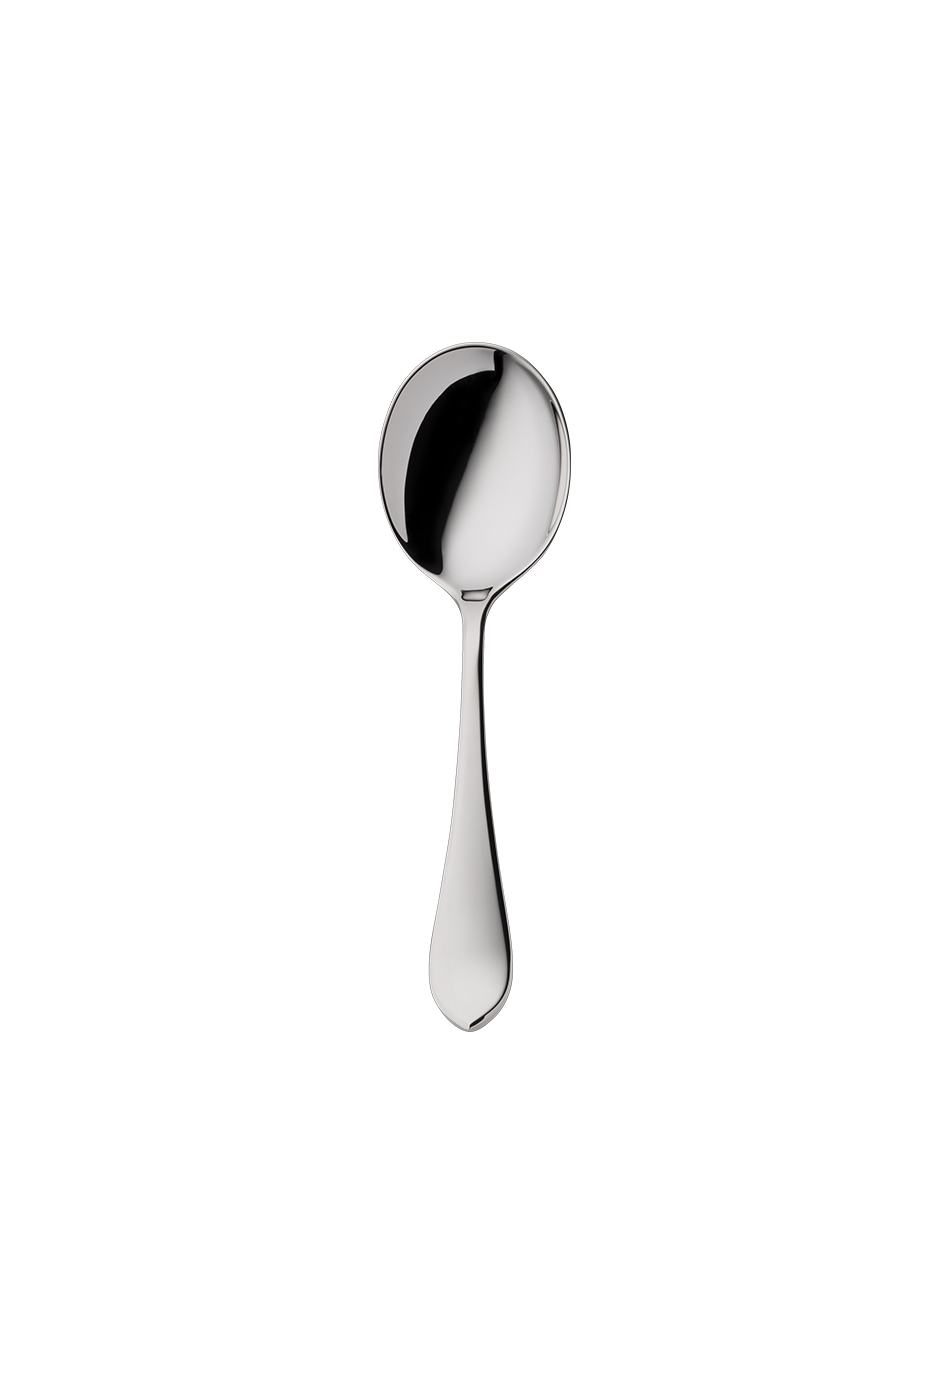 Eclipse Cream Spoon (Broth Spoon) (150g massive silverplated)